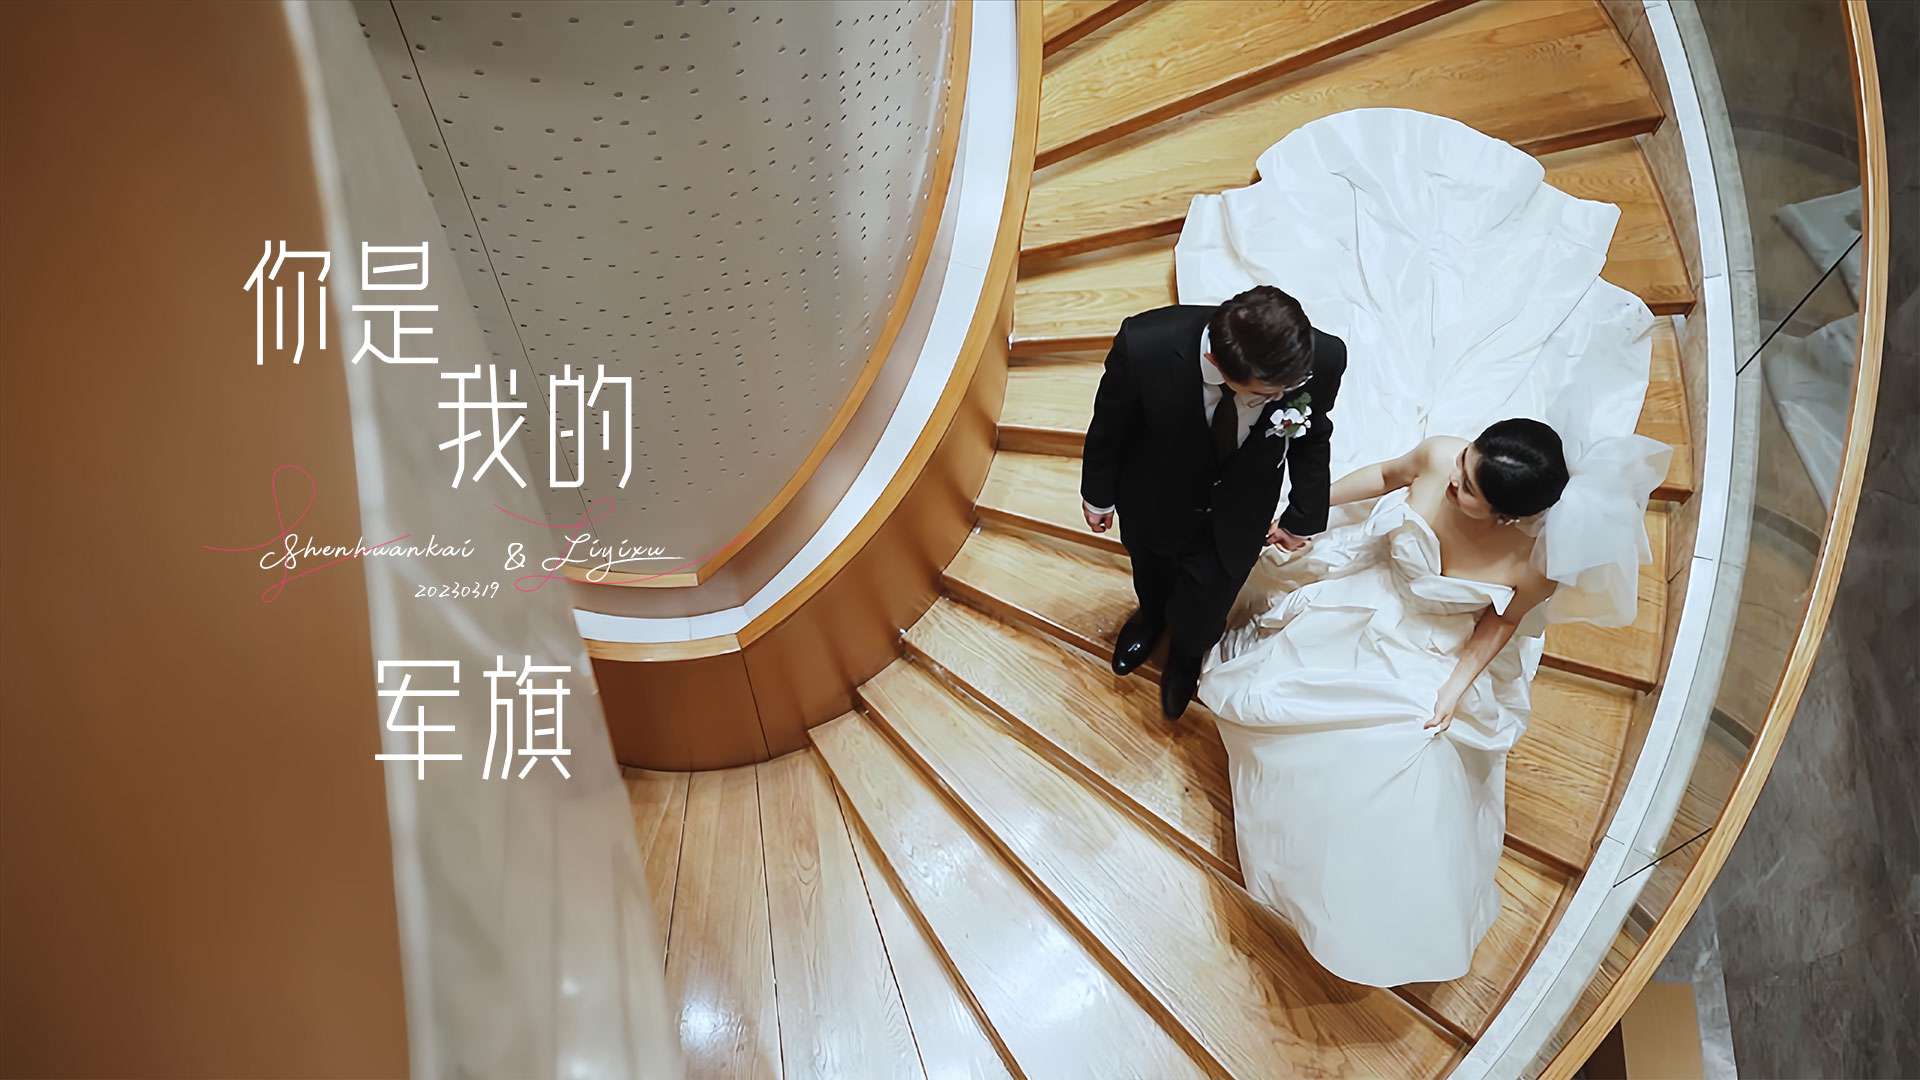 Shen+Li wedding film「你是我的军旗」